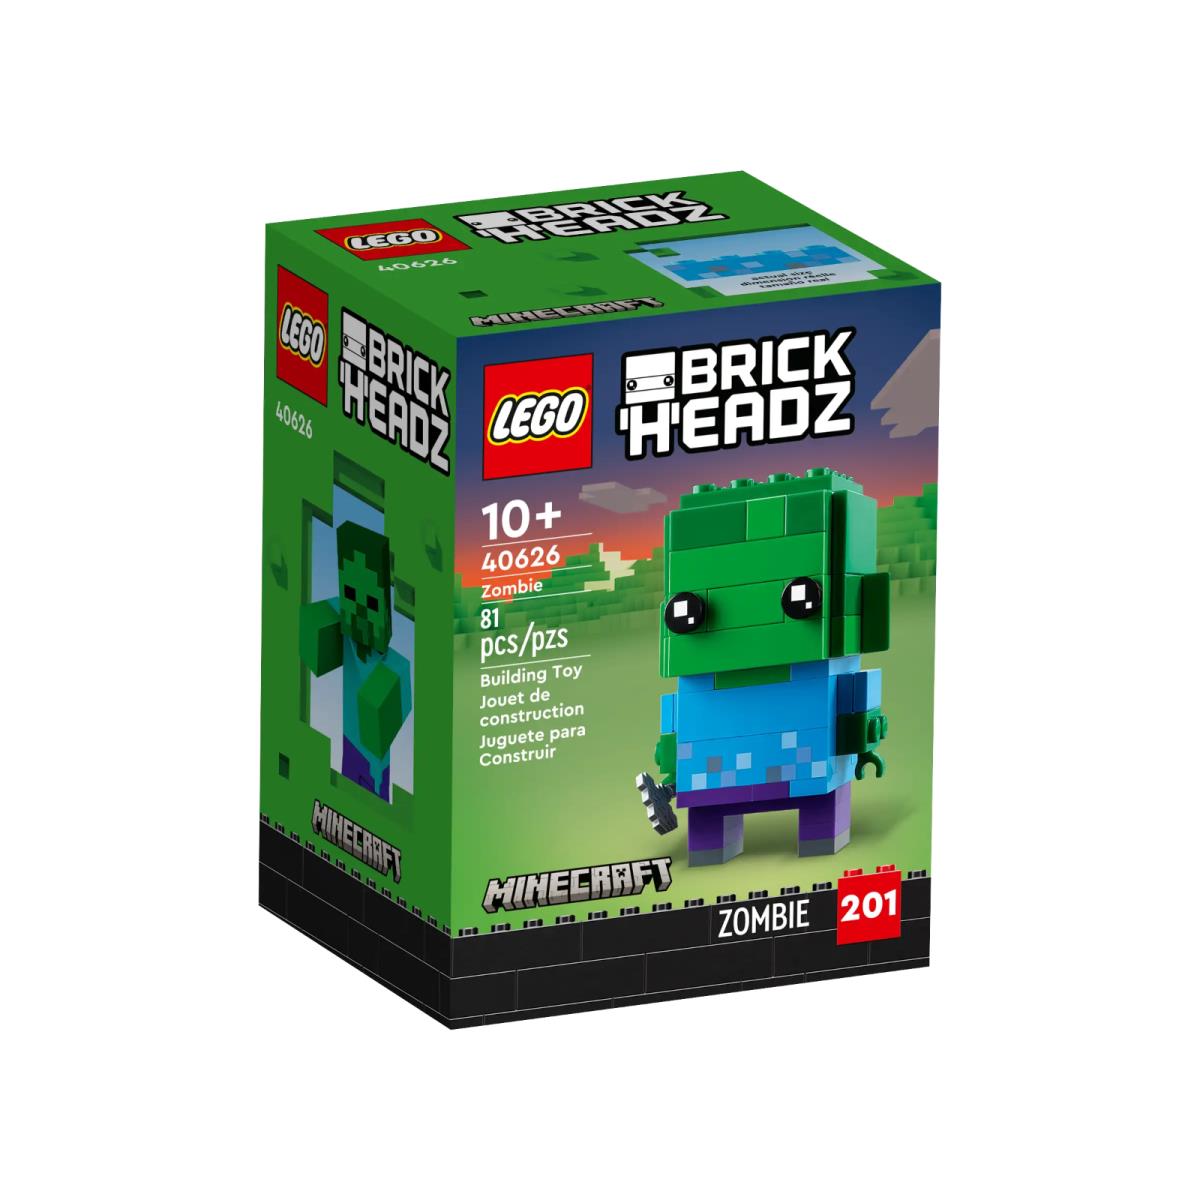 Lego Minecraft 40626 Brickheadz Zombie 201